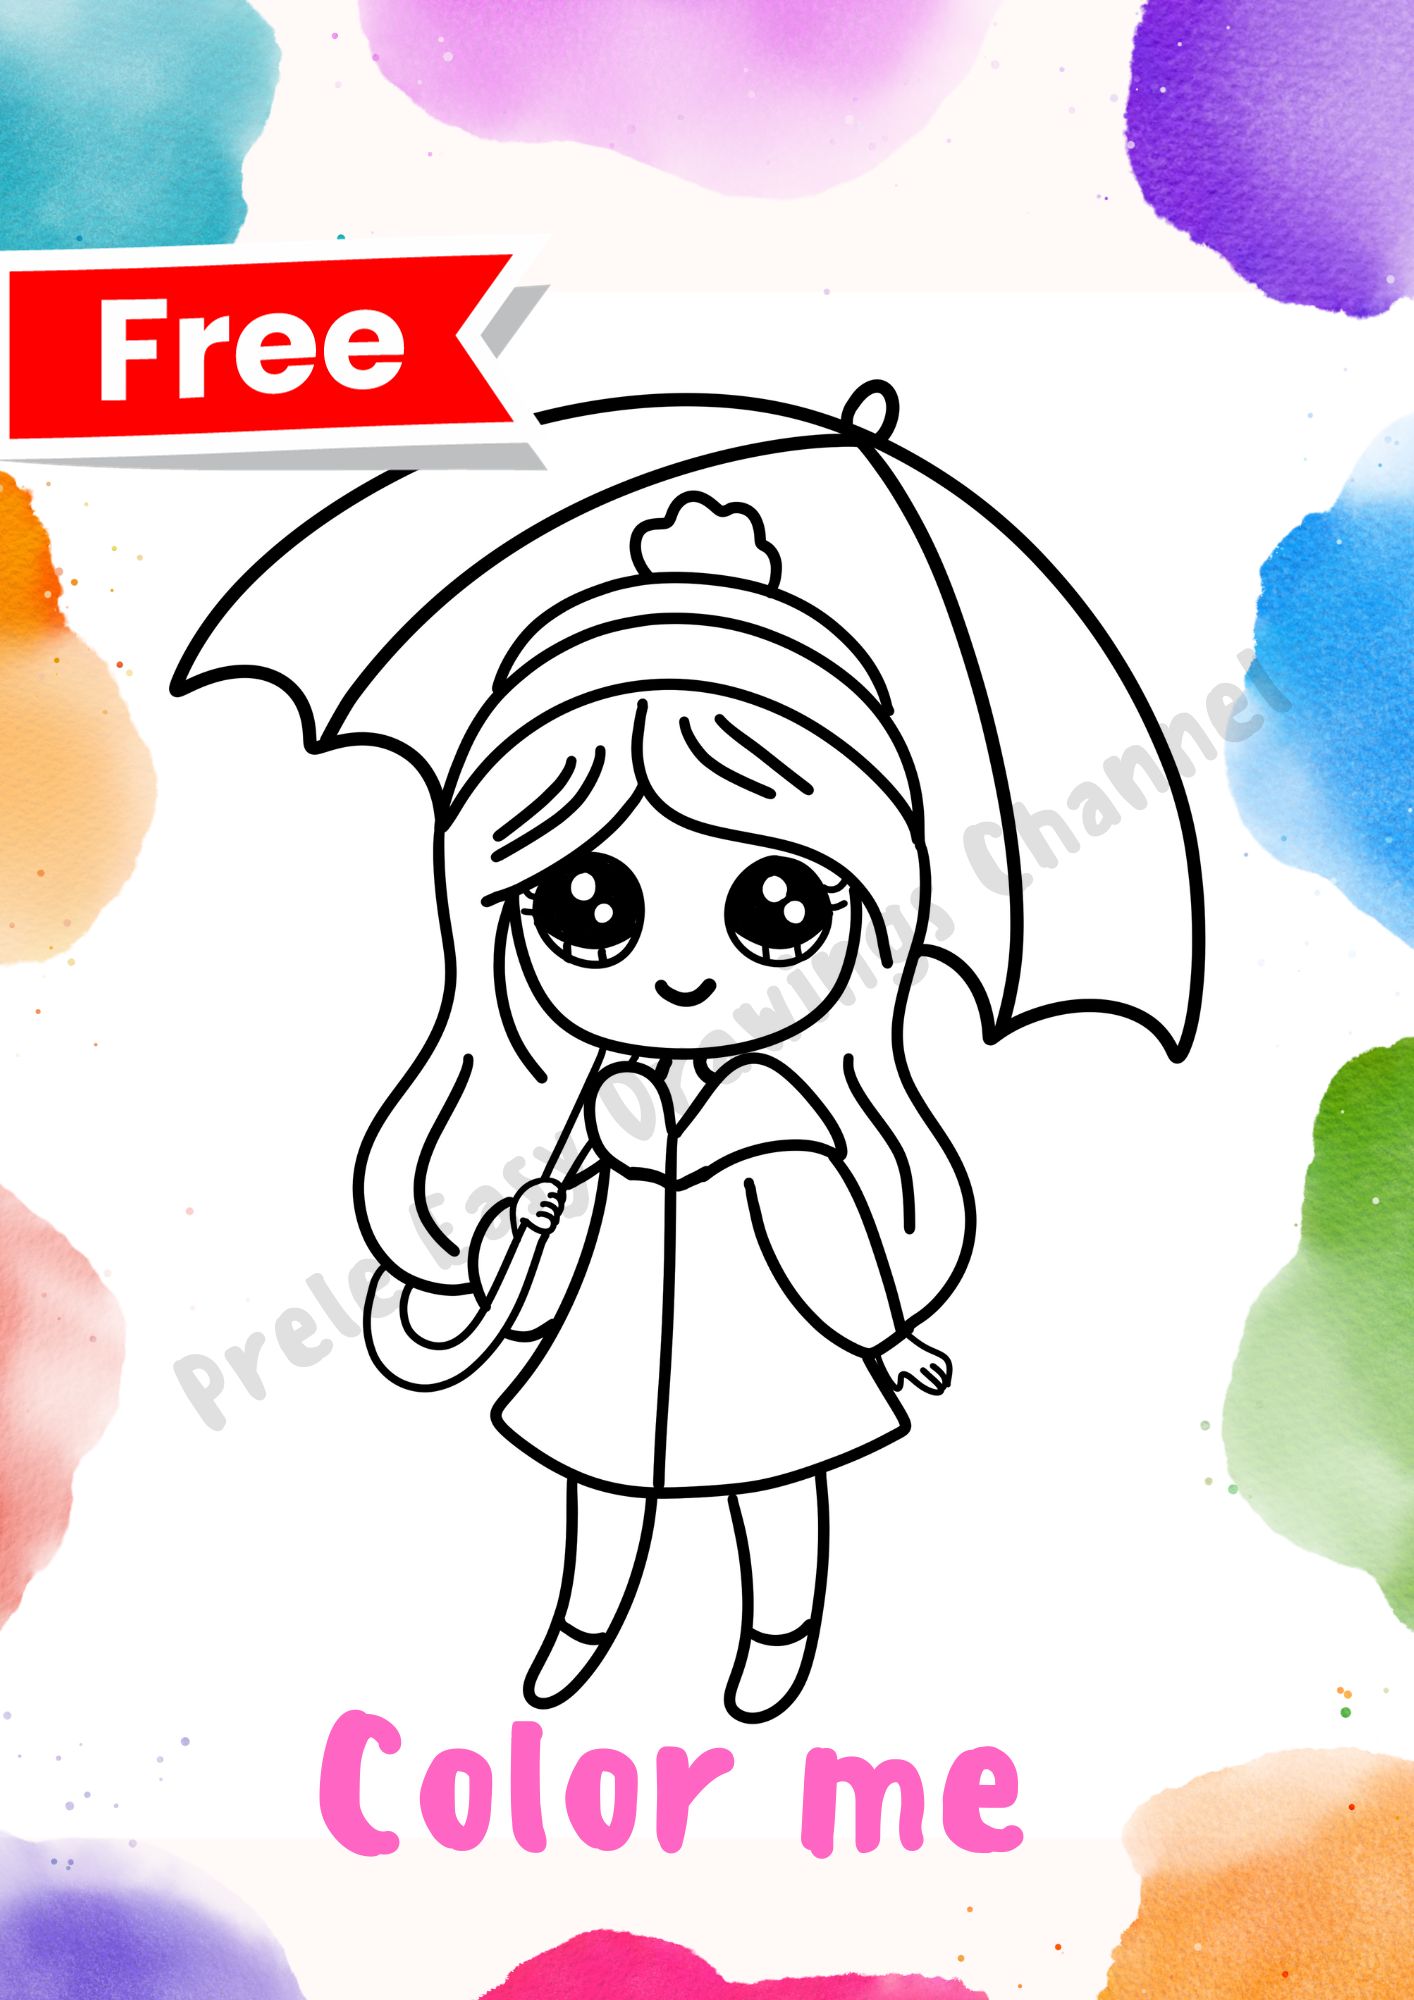 How to draw cute umbrella drawing || kawaii umbrella drawing for kids | How  to draw cute umbrella drawing || kawaii umbrella drawing for kids #drawing  #easydrawingart #pencildrawing #drawingforkids #howtodraw #art  #kawaiiart... |